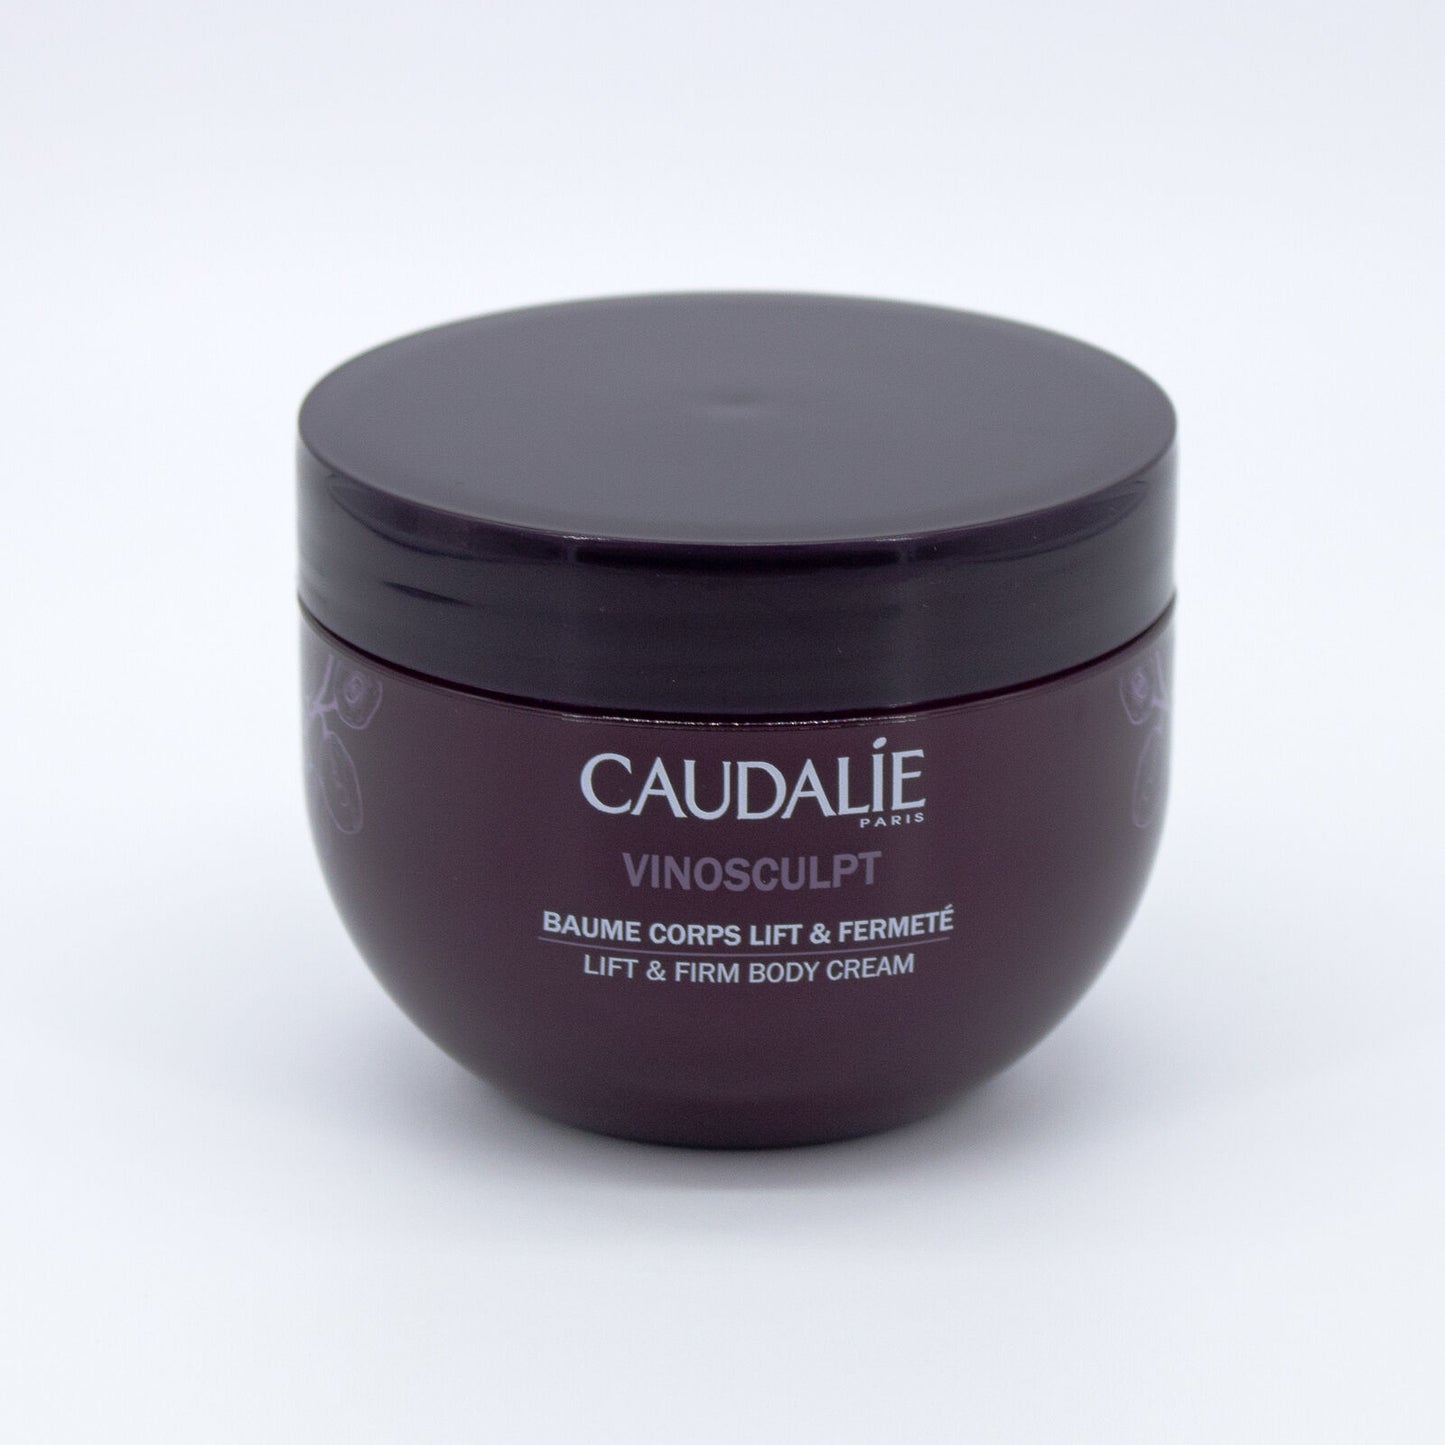 CAUDALIE VINOSCULPT Lift & Firm Body Cream 8.4oz - Imperfect Box